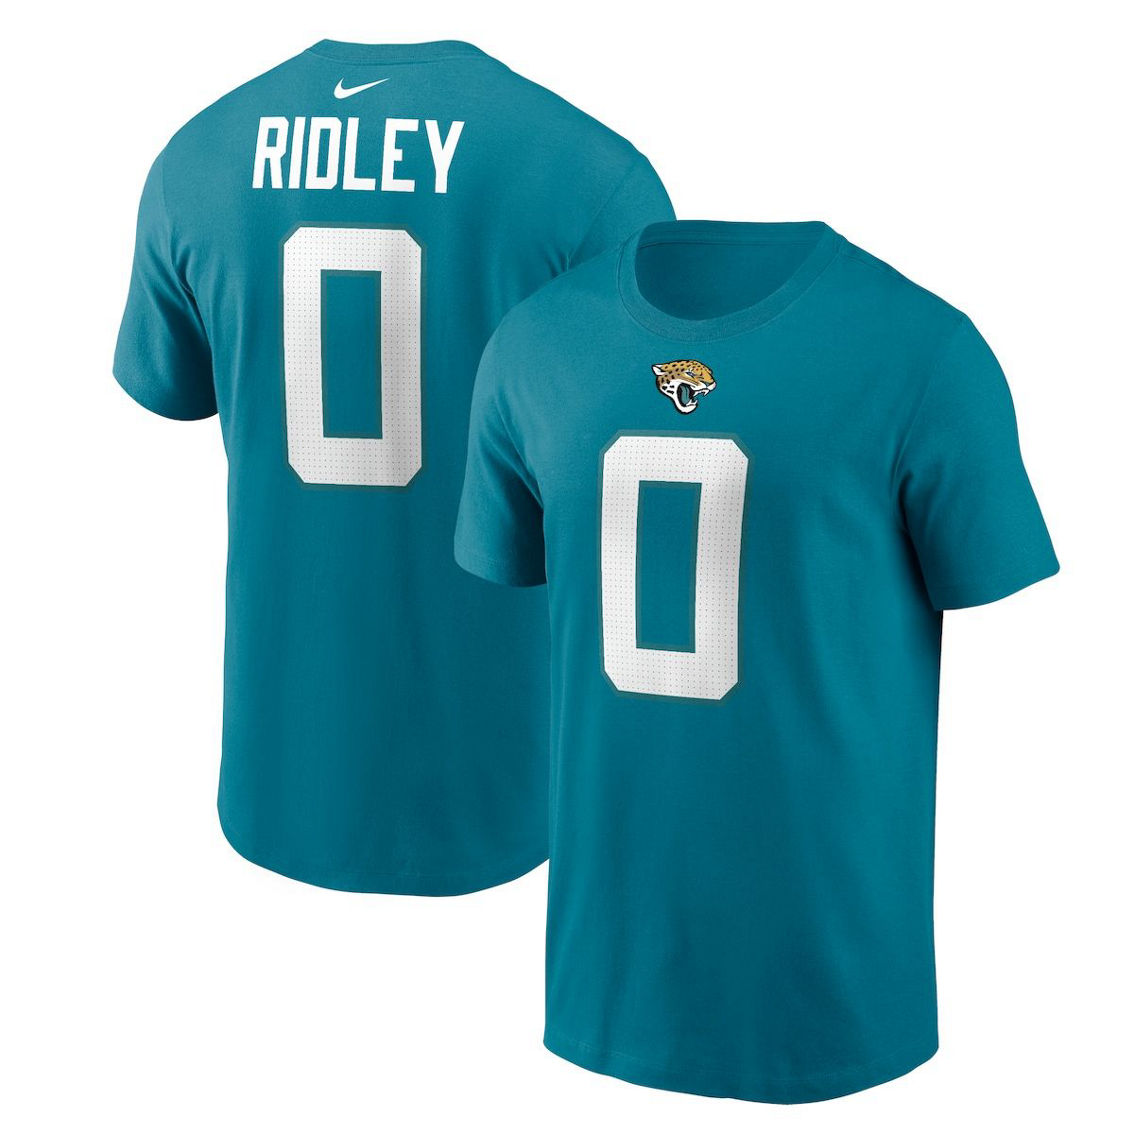 Nike Men's Calvin Ridley Teal Jacksonville Jaguars Player Name & Number T-Shirt - Image 2 of 4